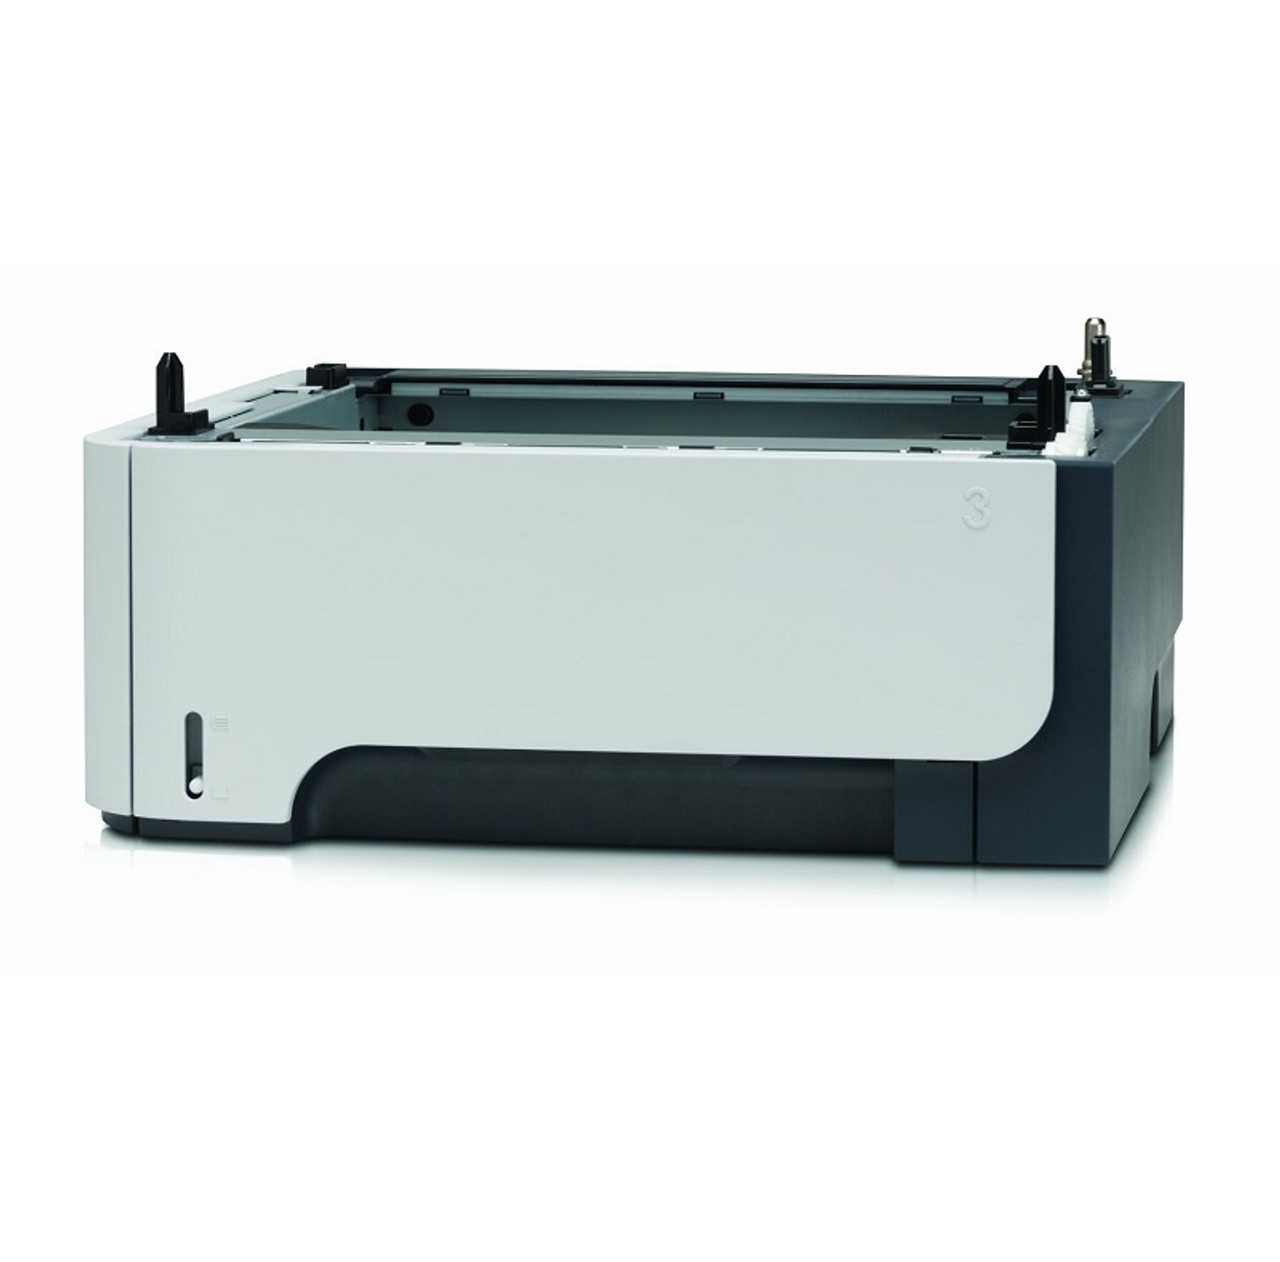 C8055A - HP 500-Sheets Paper Feeder Tray / Cassette for LaserJet 4000 / 4050 / 4100 Series Printer (Refurbished / Grade-A)